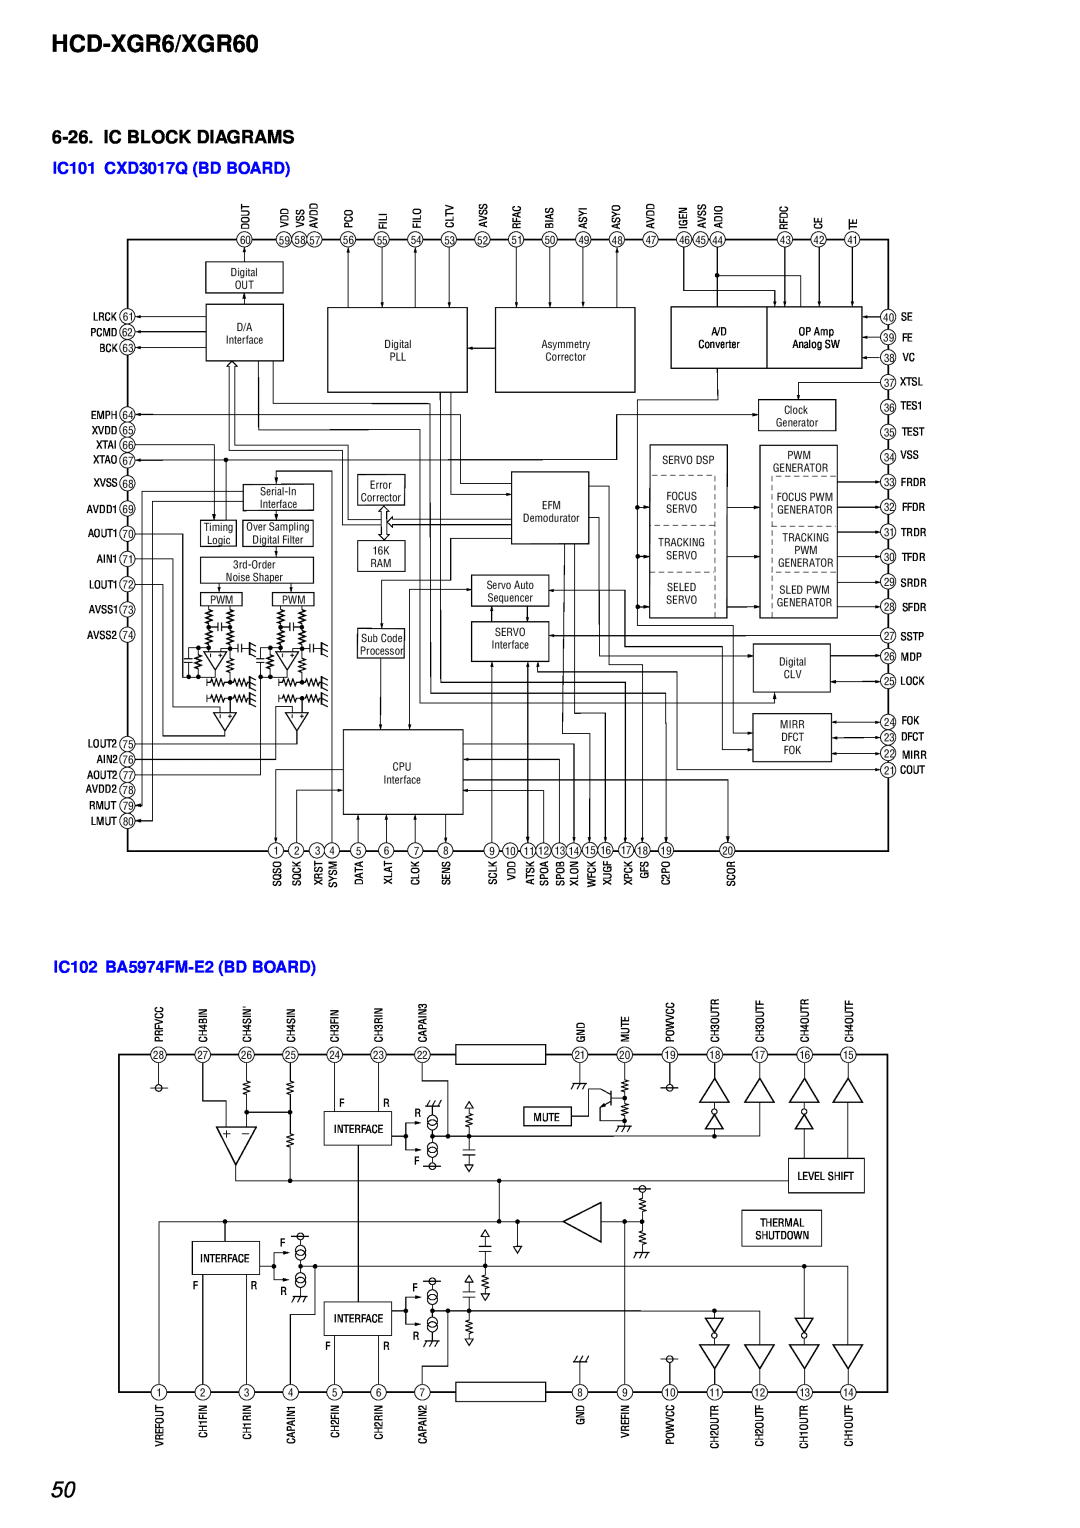 Sony HCD-XGR60 specifications Ic Block Diagrams, HCD-XGR6/XGR60, IC101 CXD3017Q BD BOARD, IC102 BA5974FM-E2 BD BOARD 